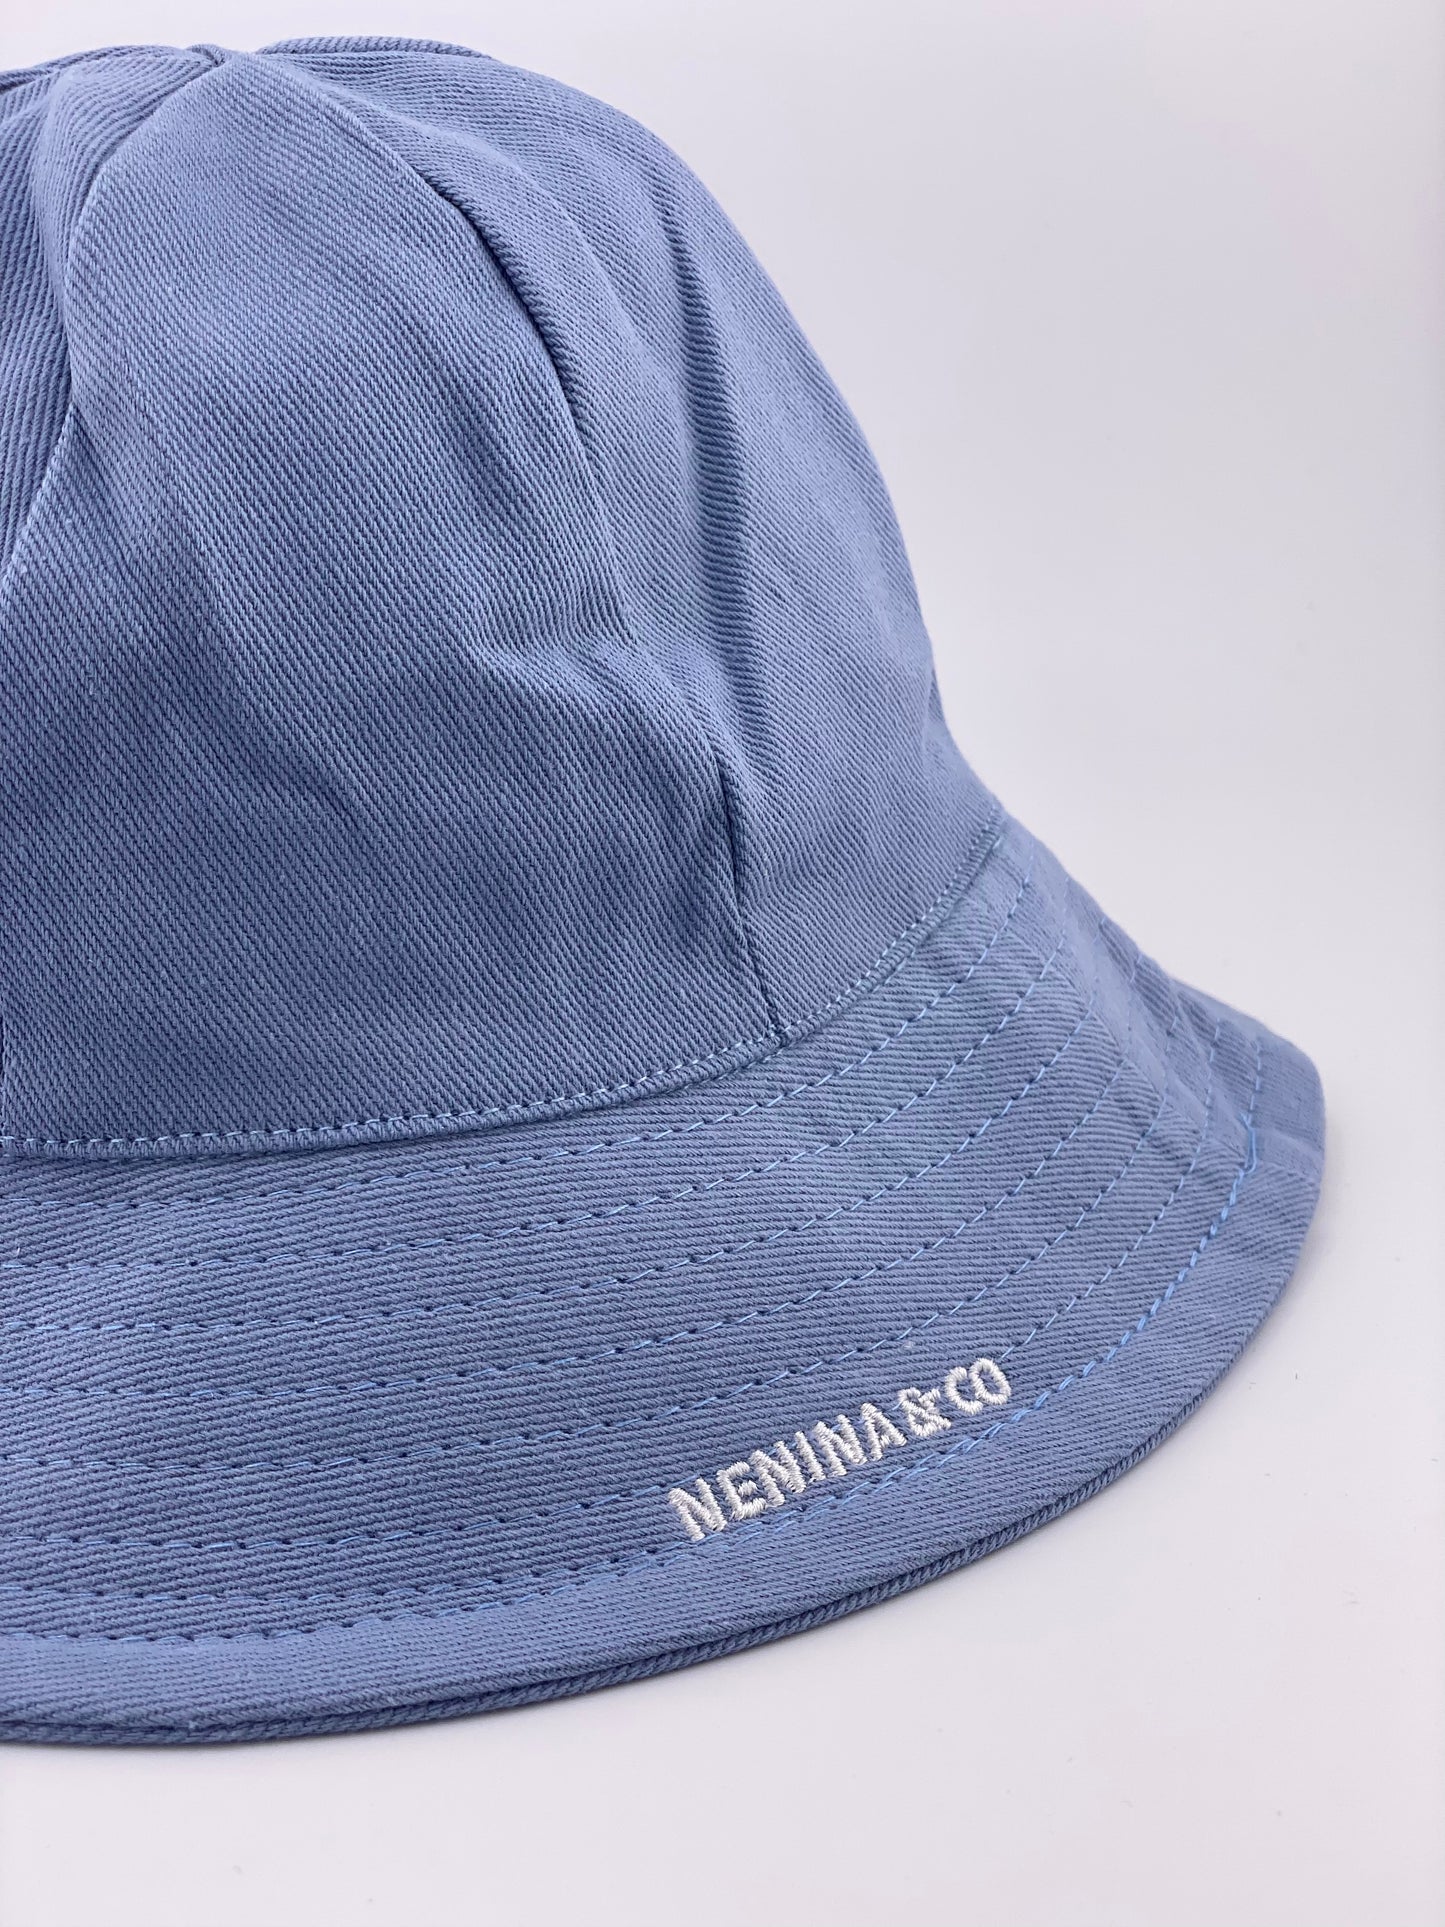 
                  
                    Chapeau Bleu Nenina &amp; Co 100% Coton
                  
                